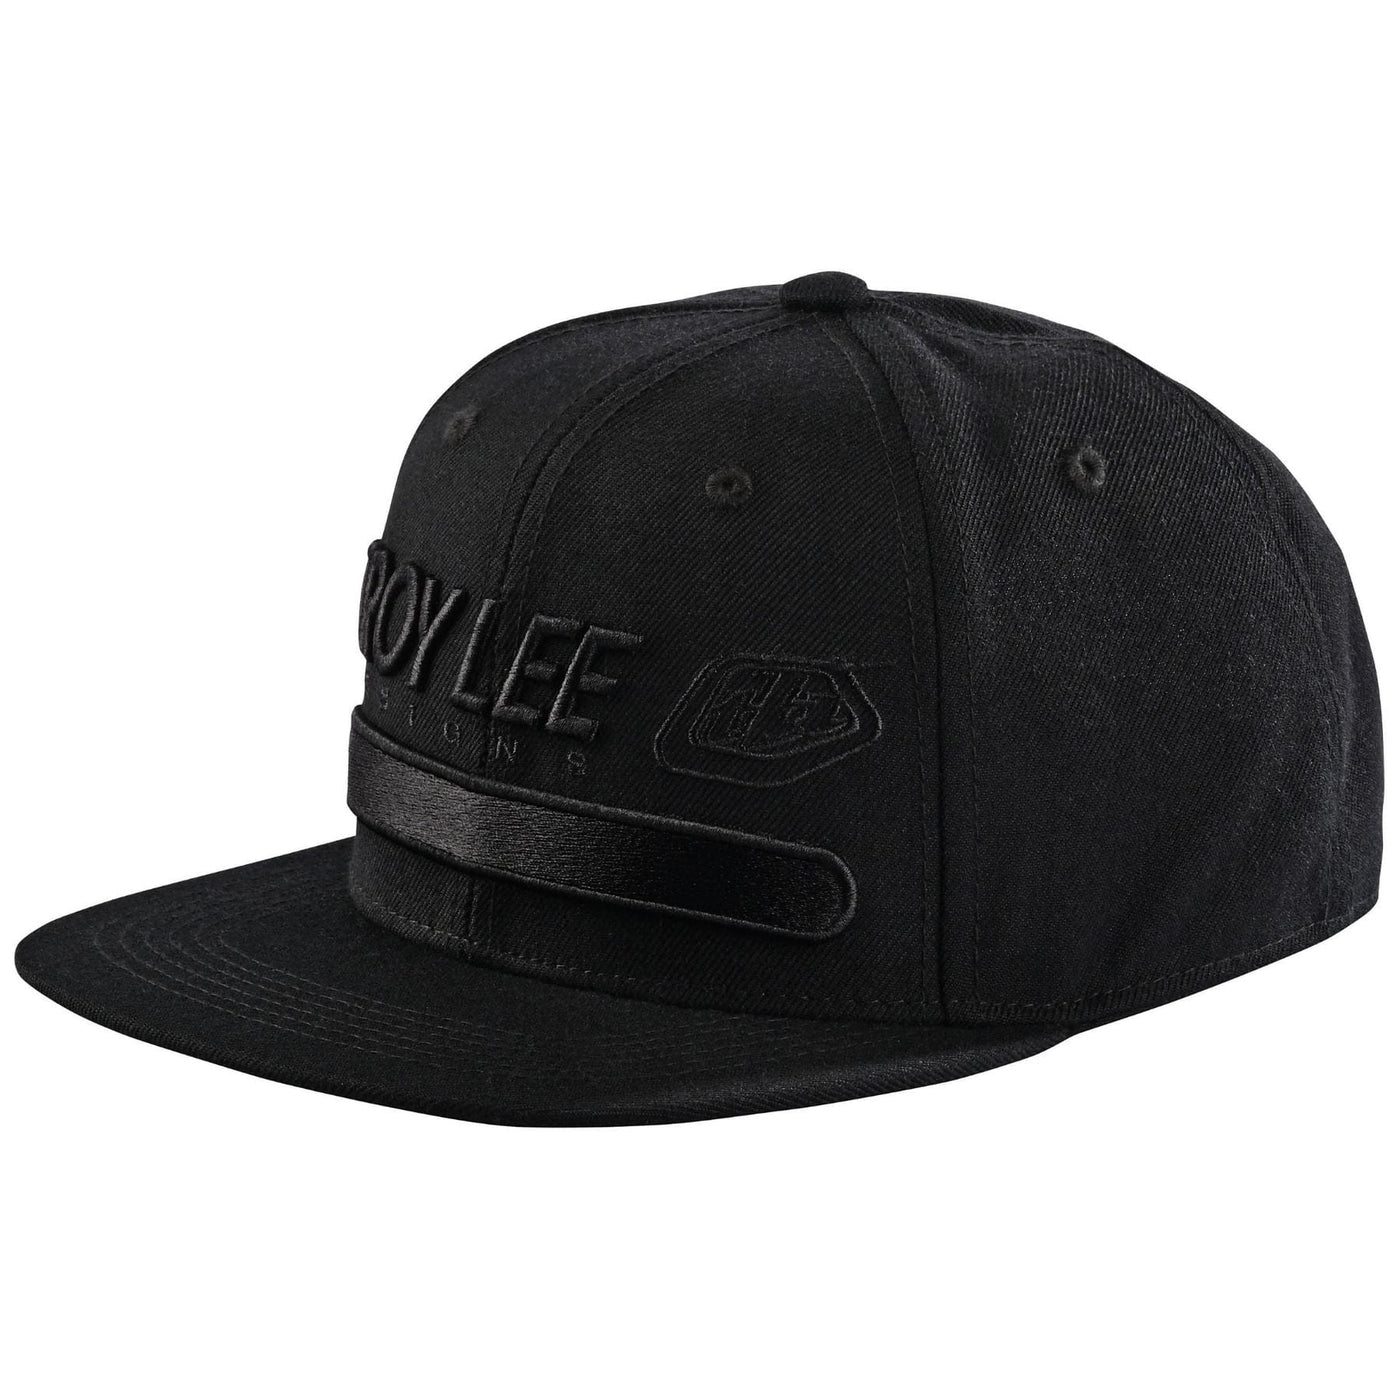 Troy Lee Designs 9FIFTY Drop In Snapback Hat - Black/Reflective